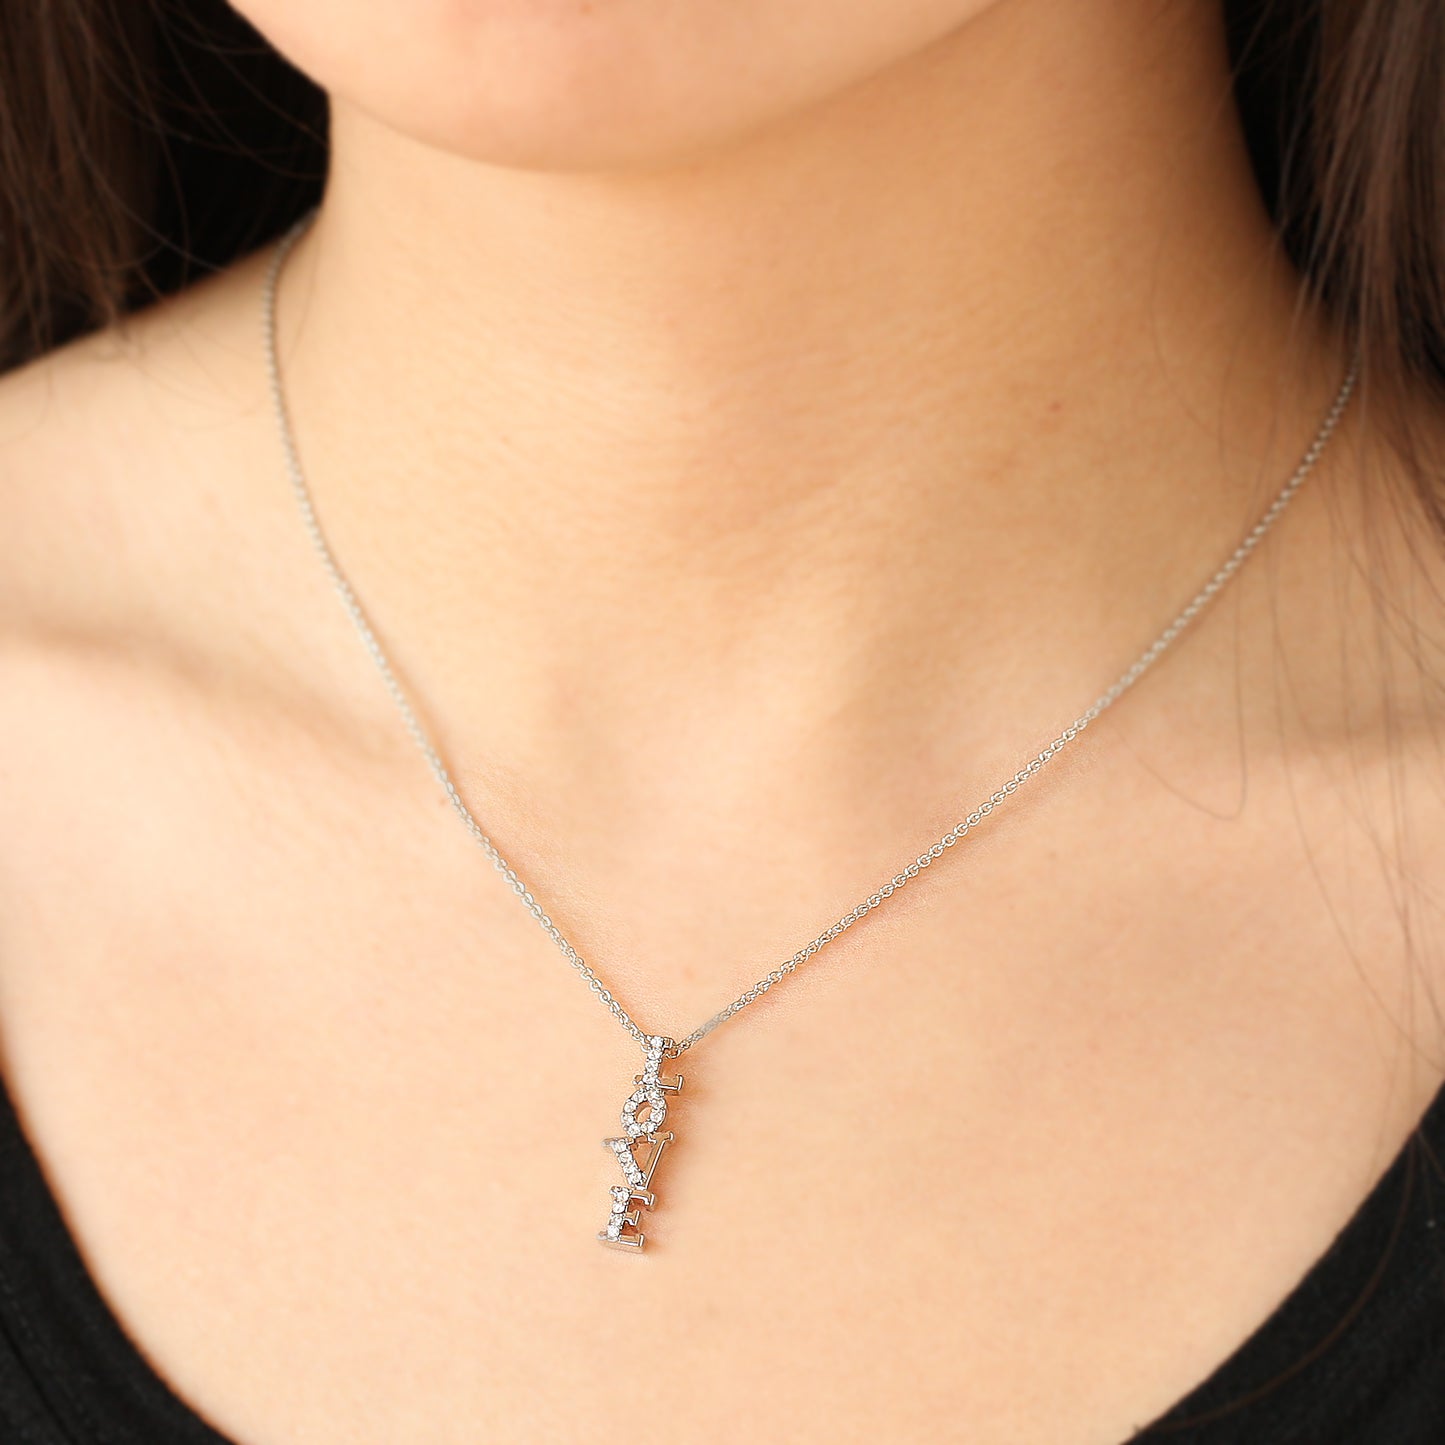 Love Pendant Necklace with Premium CZ